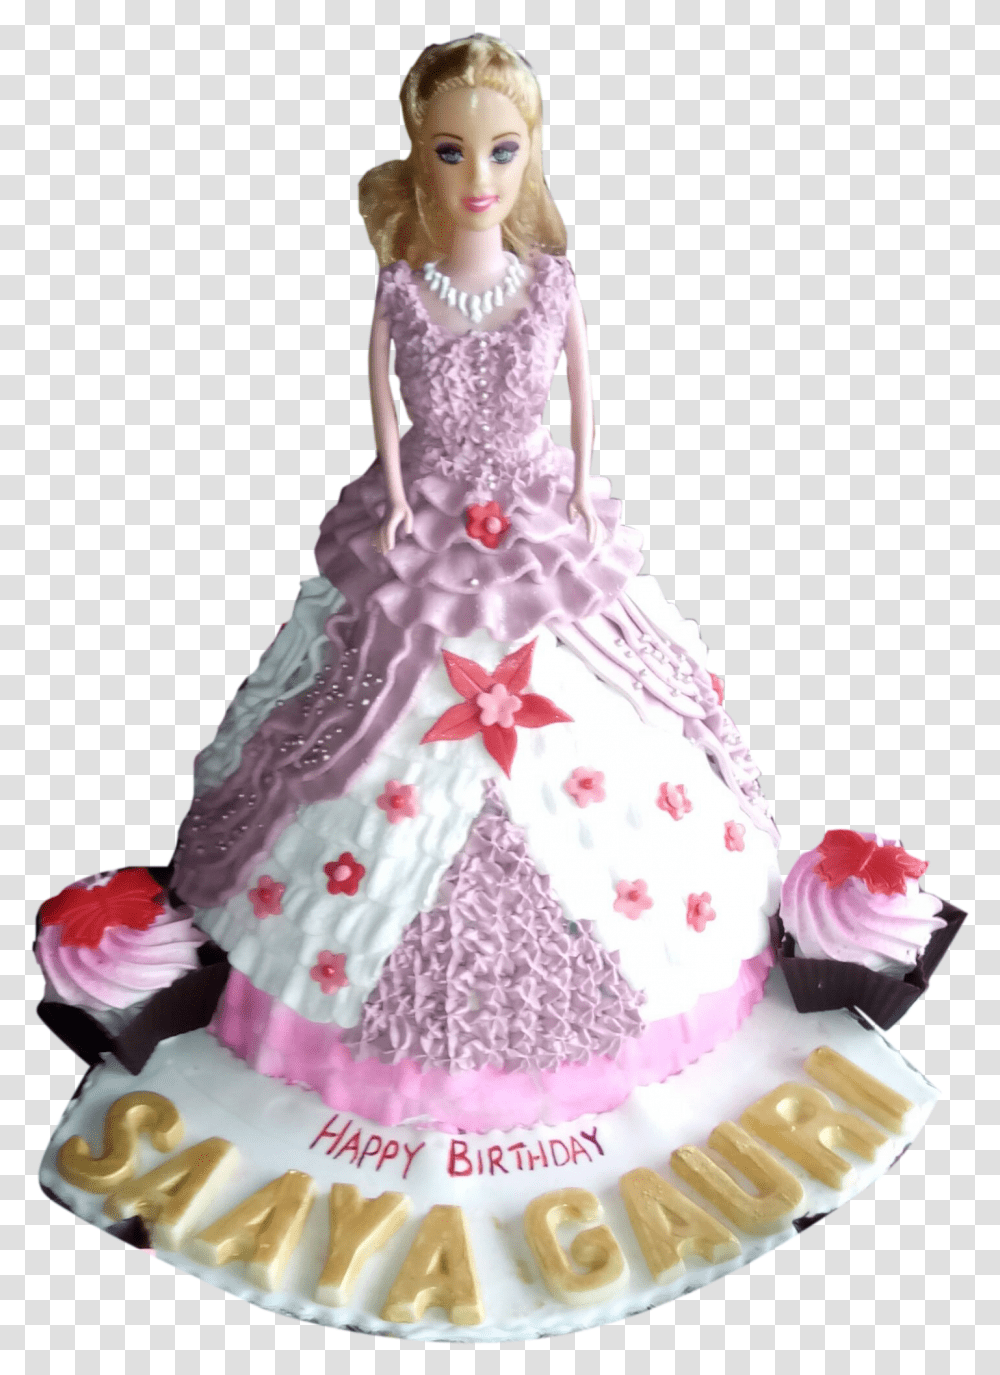 Barbie Doll Cake Pink Amp White Le Torta Cake Shop Aluva Happy Birthday Cake Barbie Doll, Dessert, Food, Figurine, Wedding Cake Transparent Png